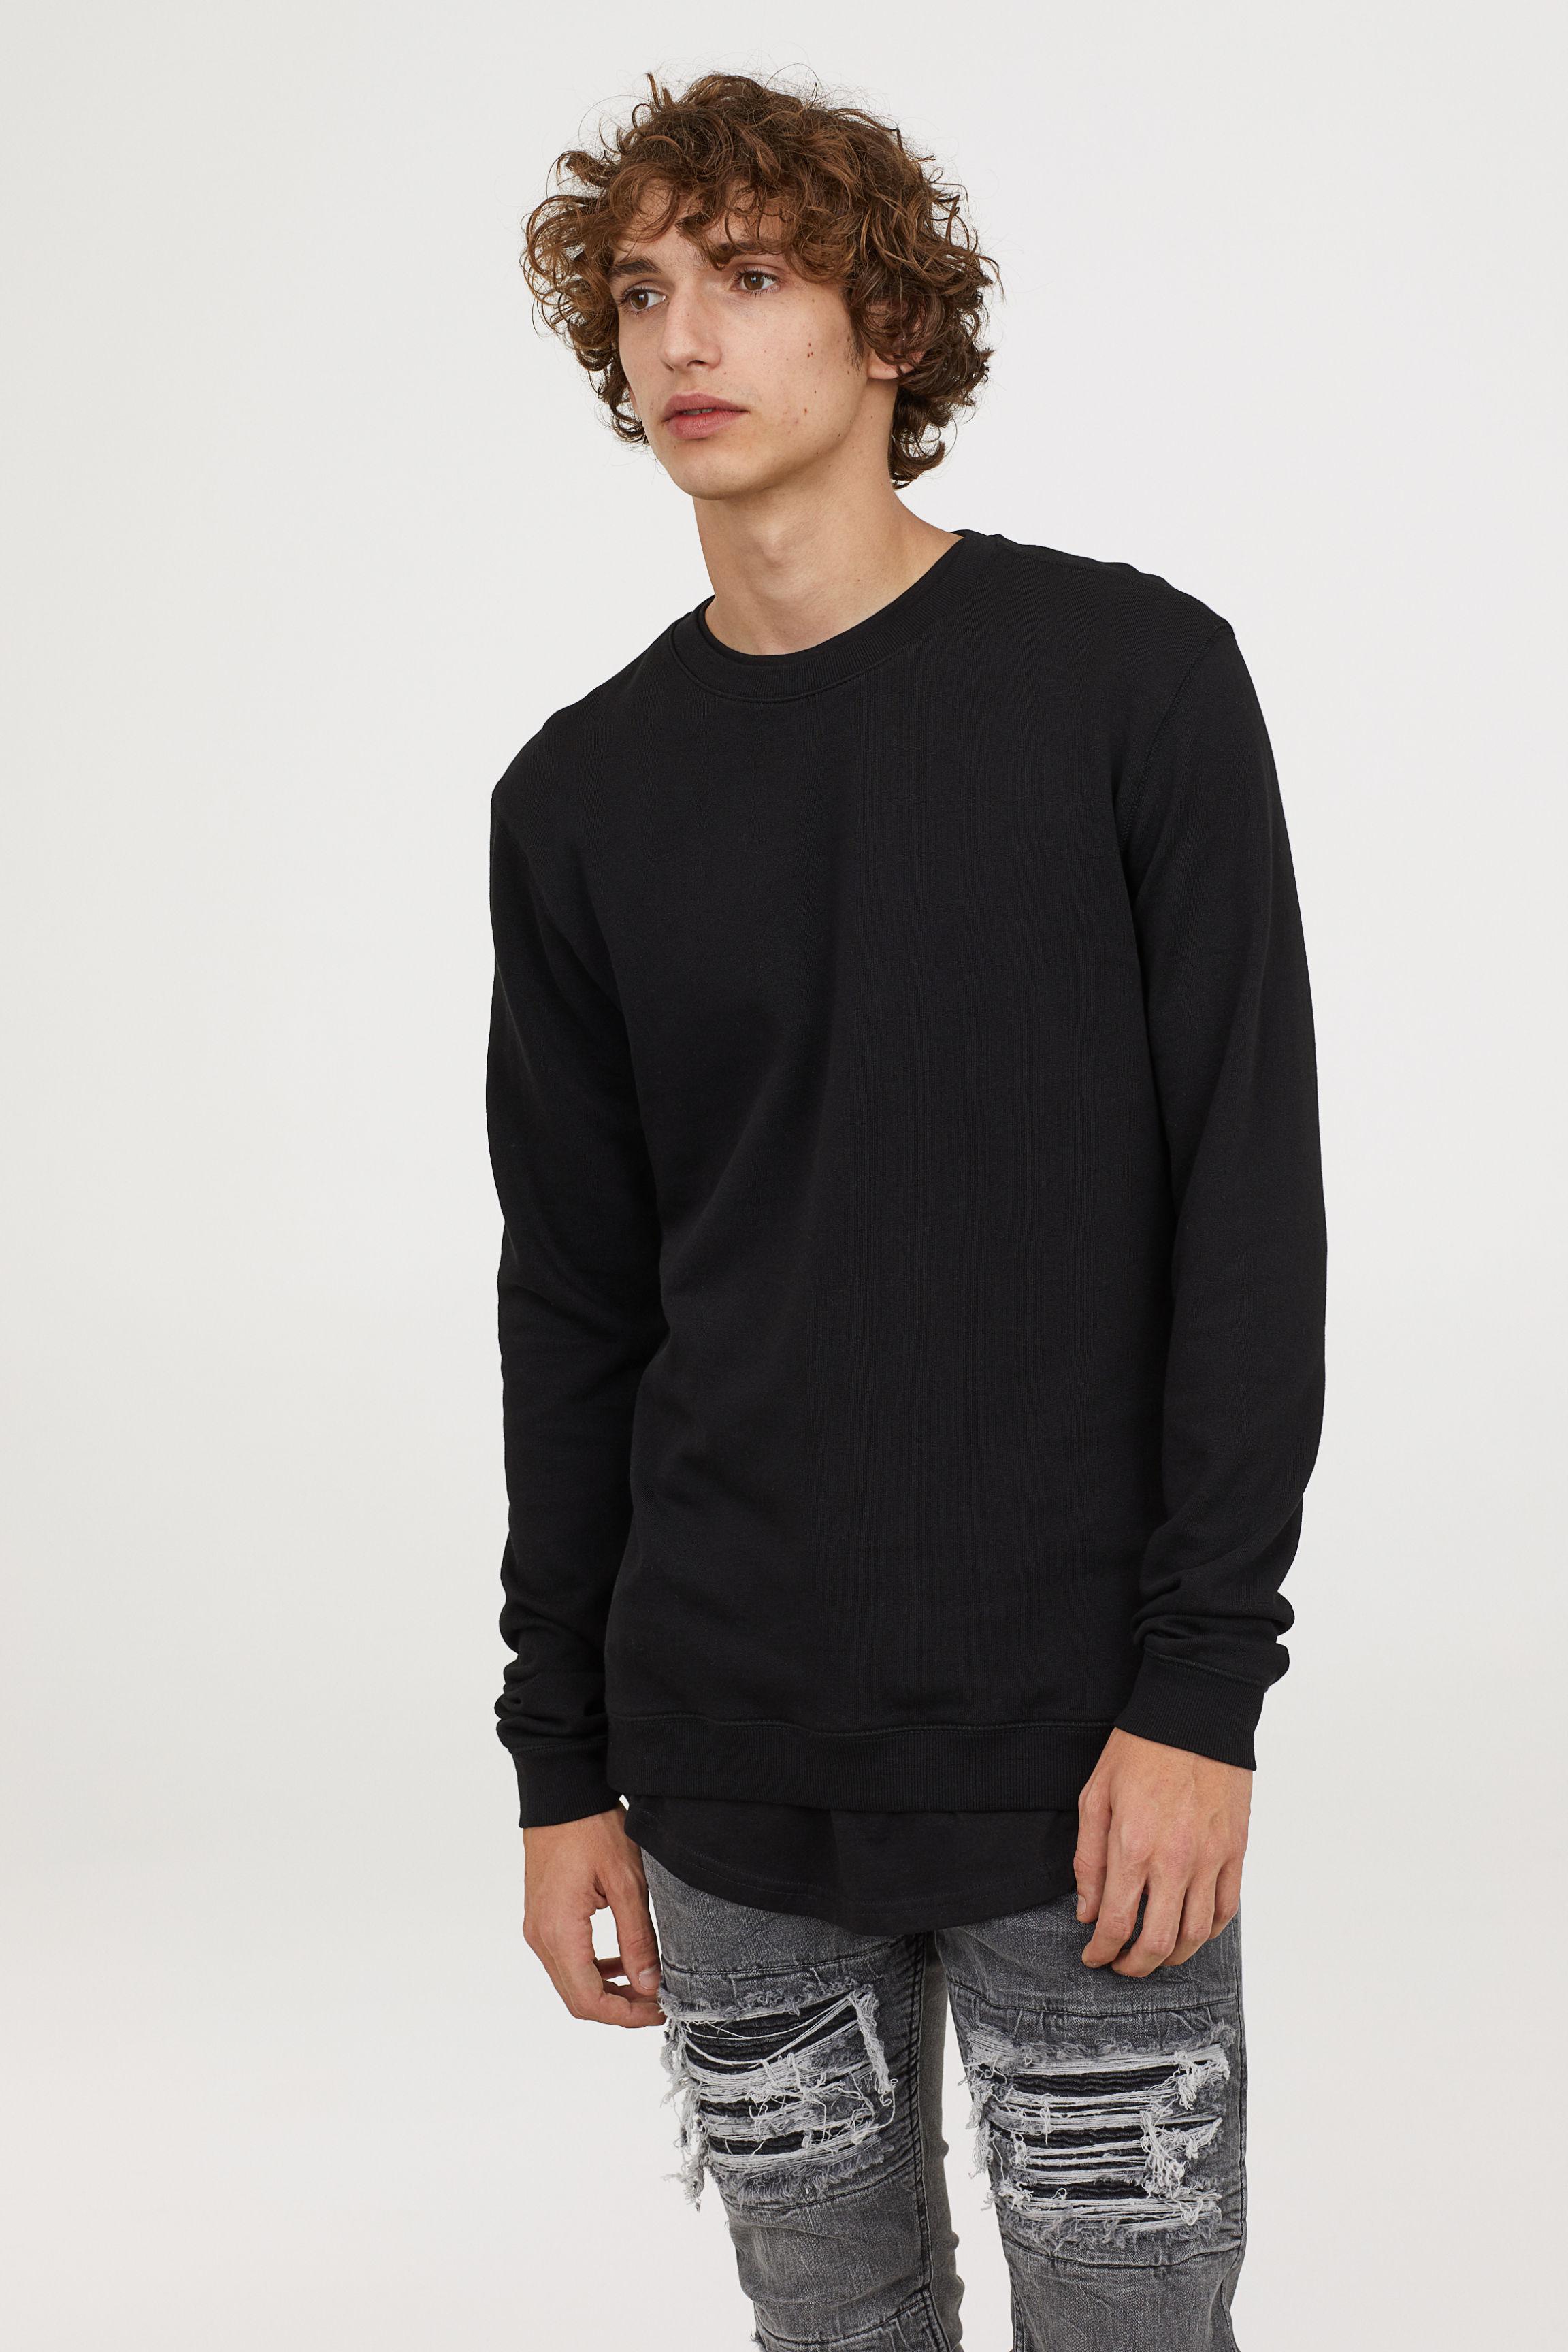  H  M  Cotton Sweatshirt  Muscle Fit in Black for Men Lyst